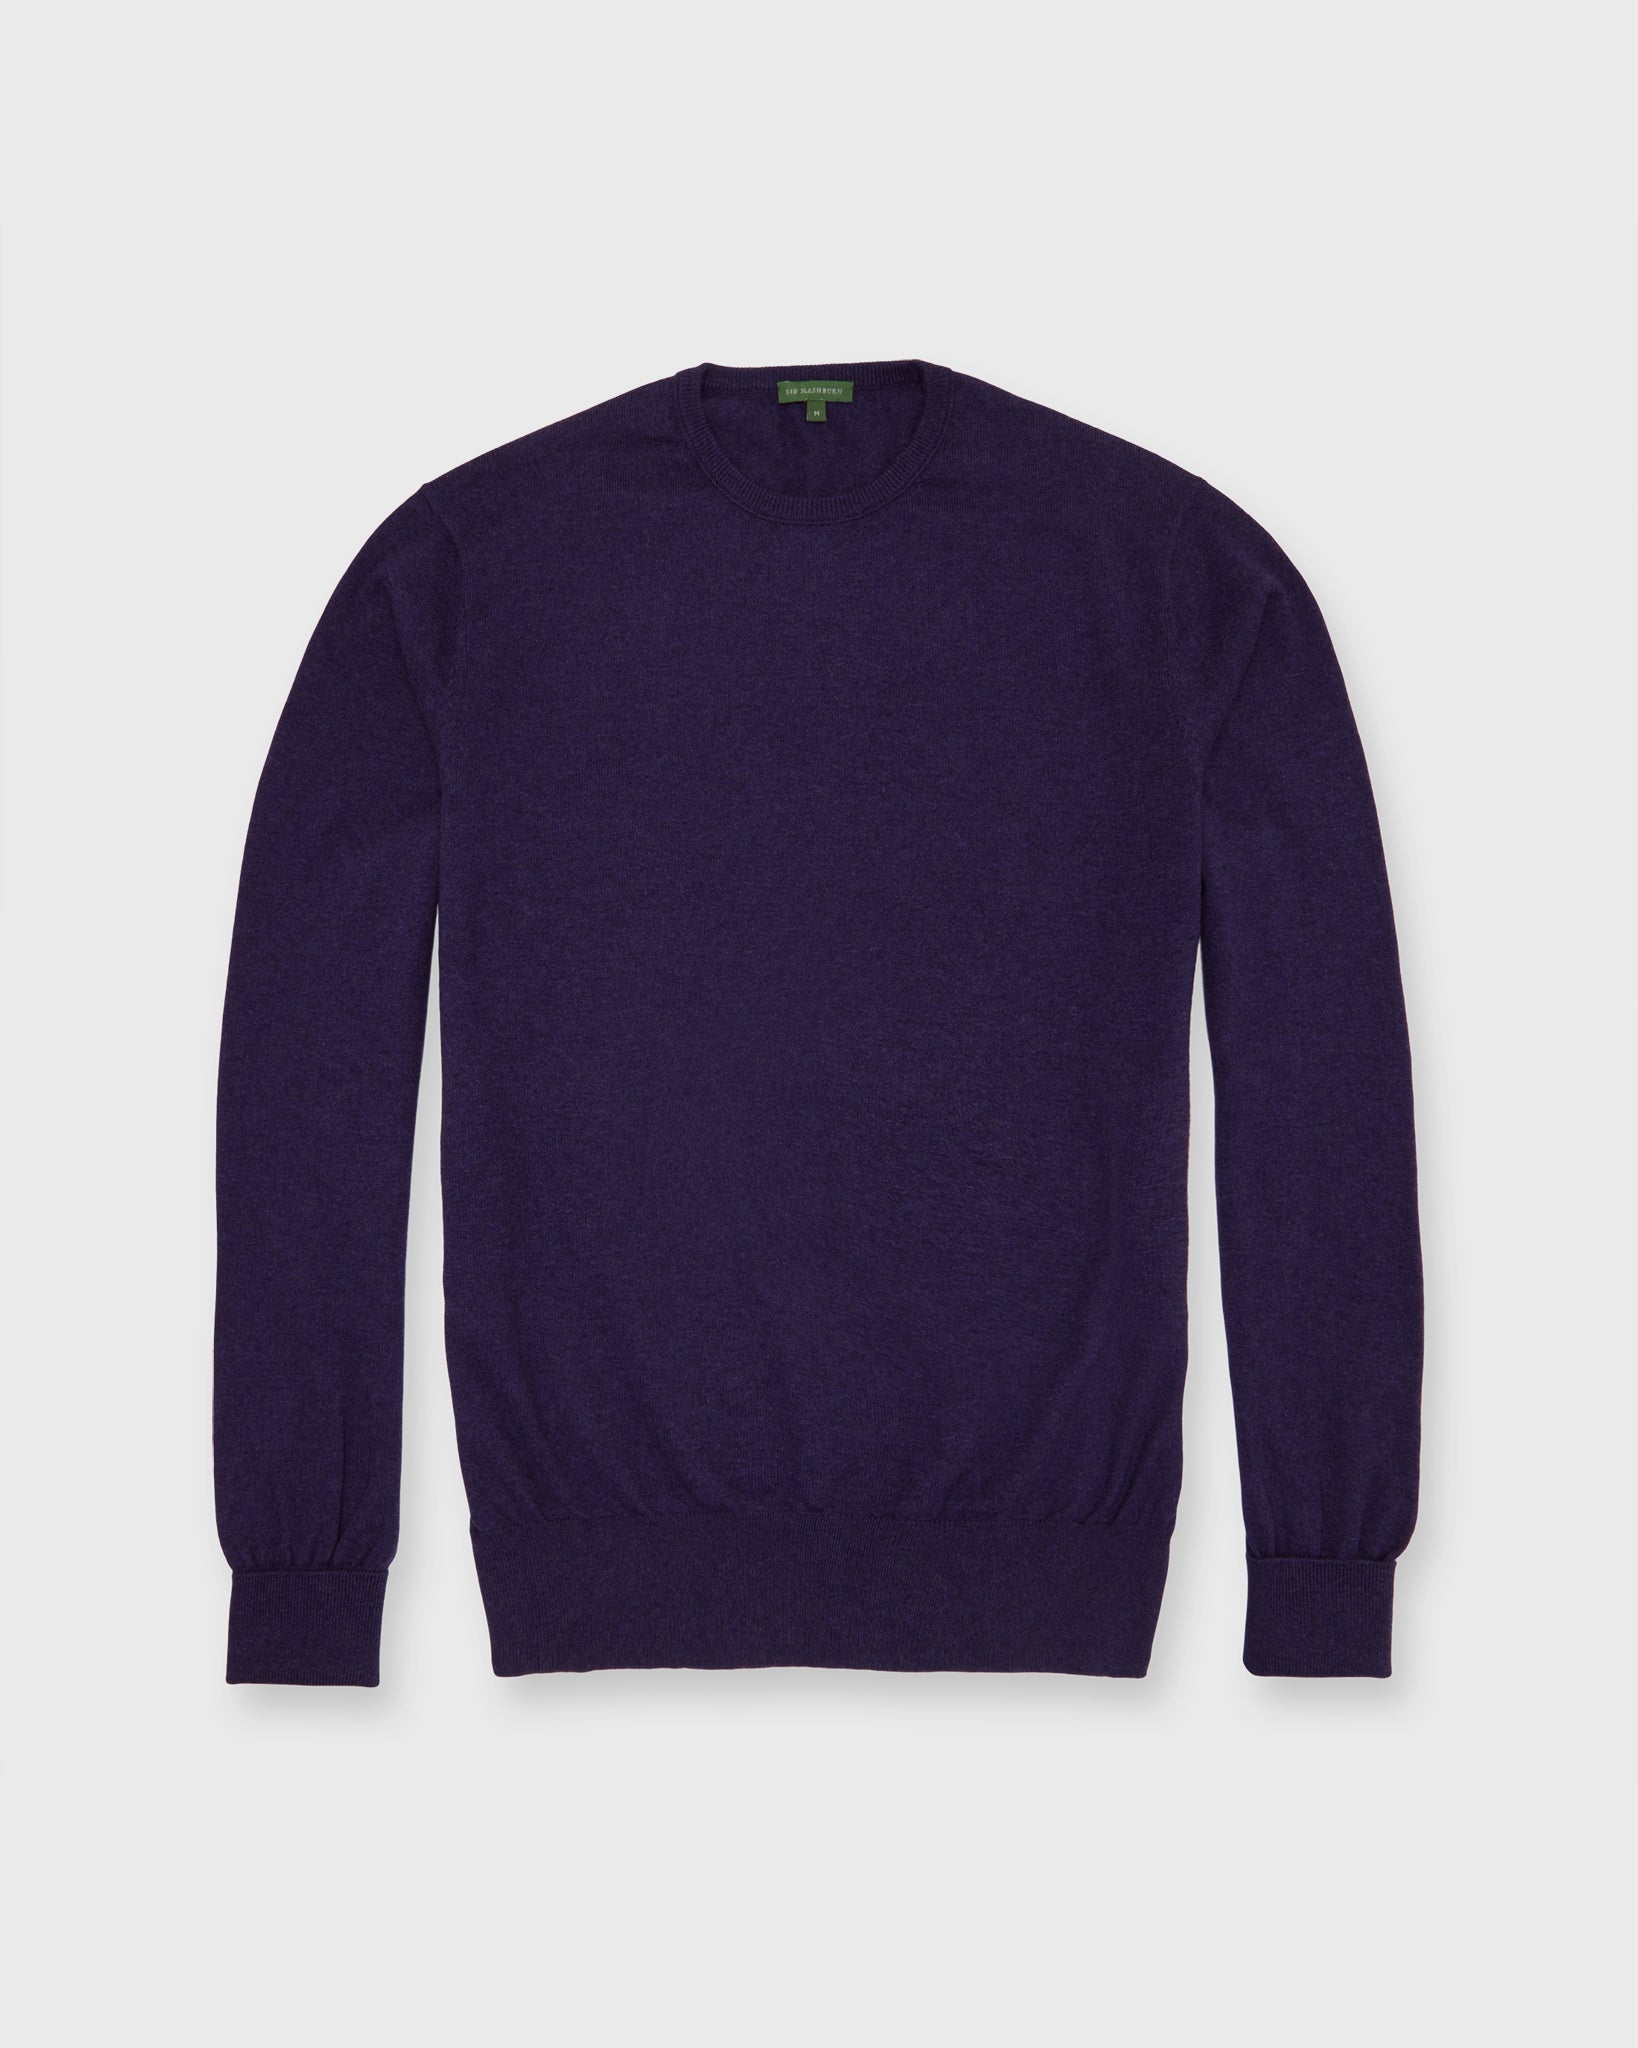 Casual Crewneck Sweater in Heather Eggplant Cotton/Cashmere